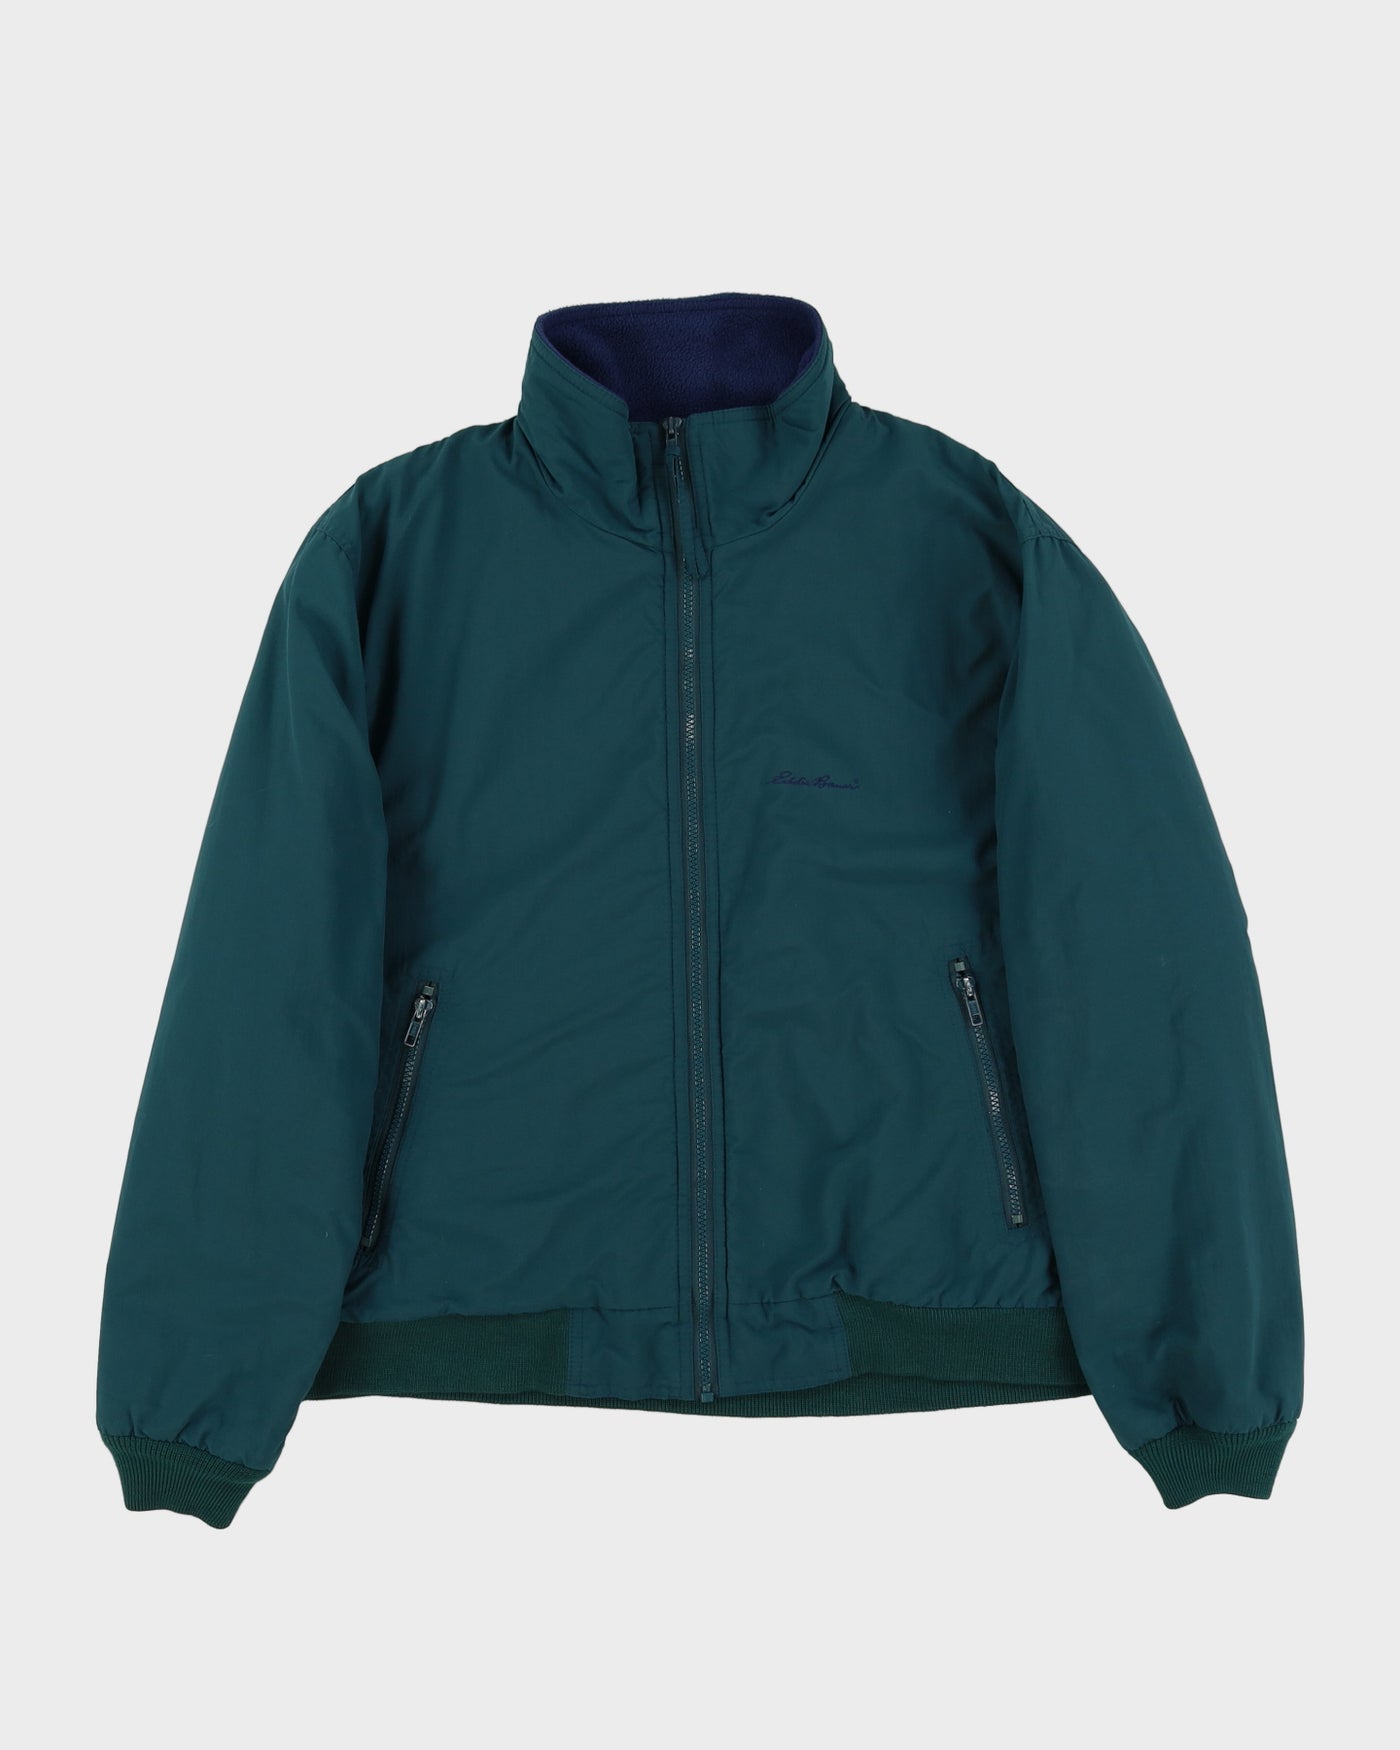 Eddie Bower Green Padded Fleece-Lined Jacket - M